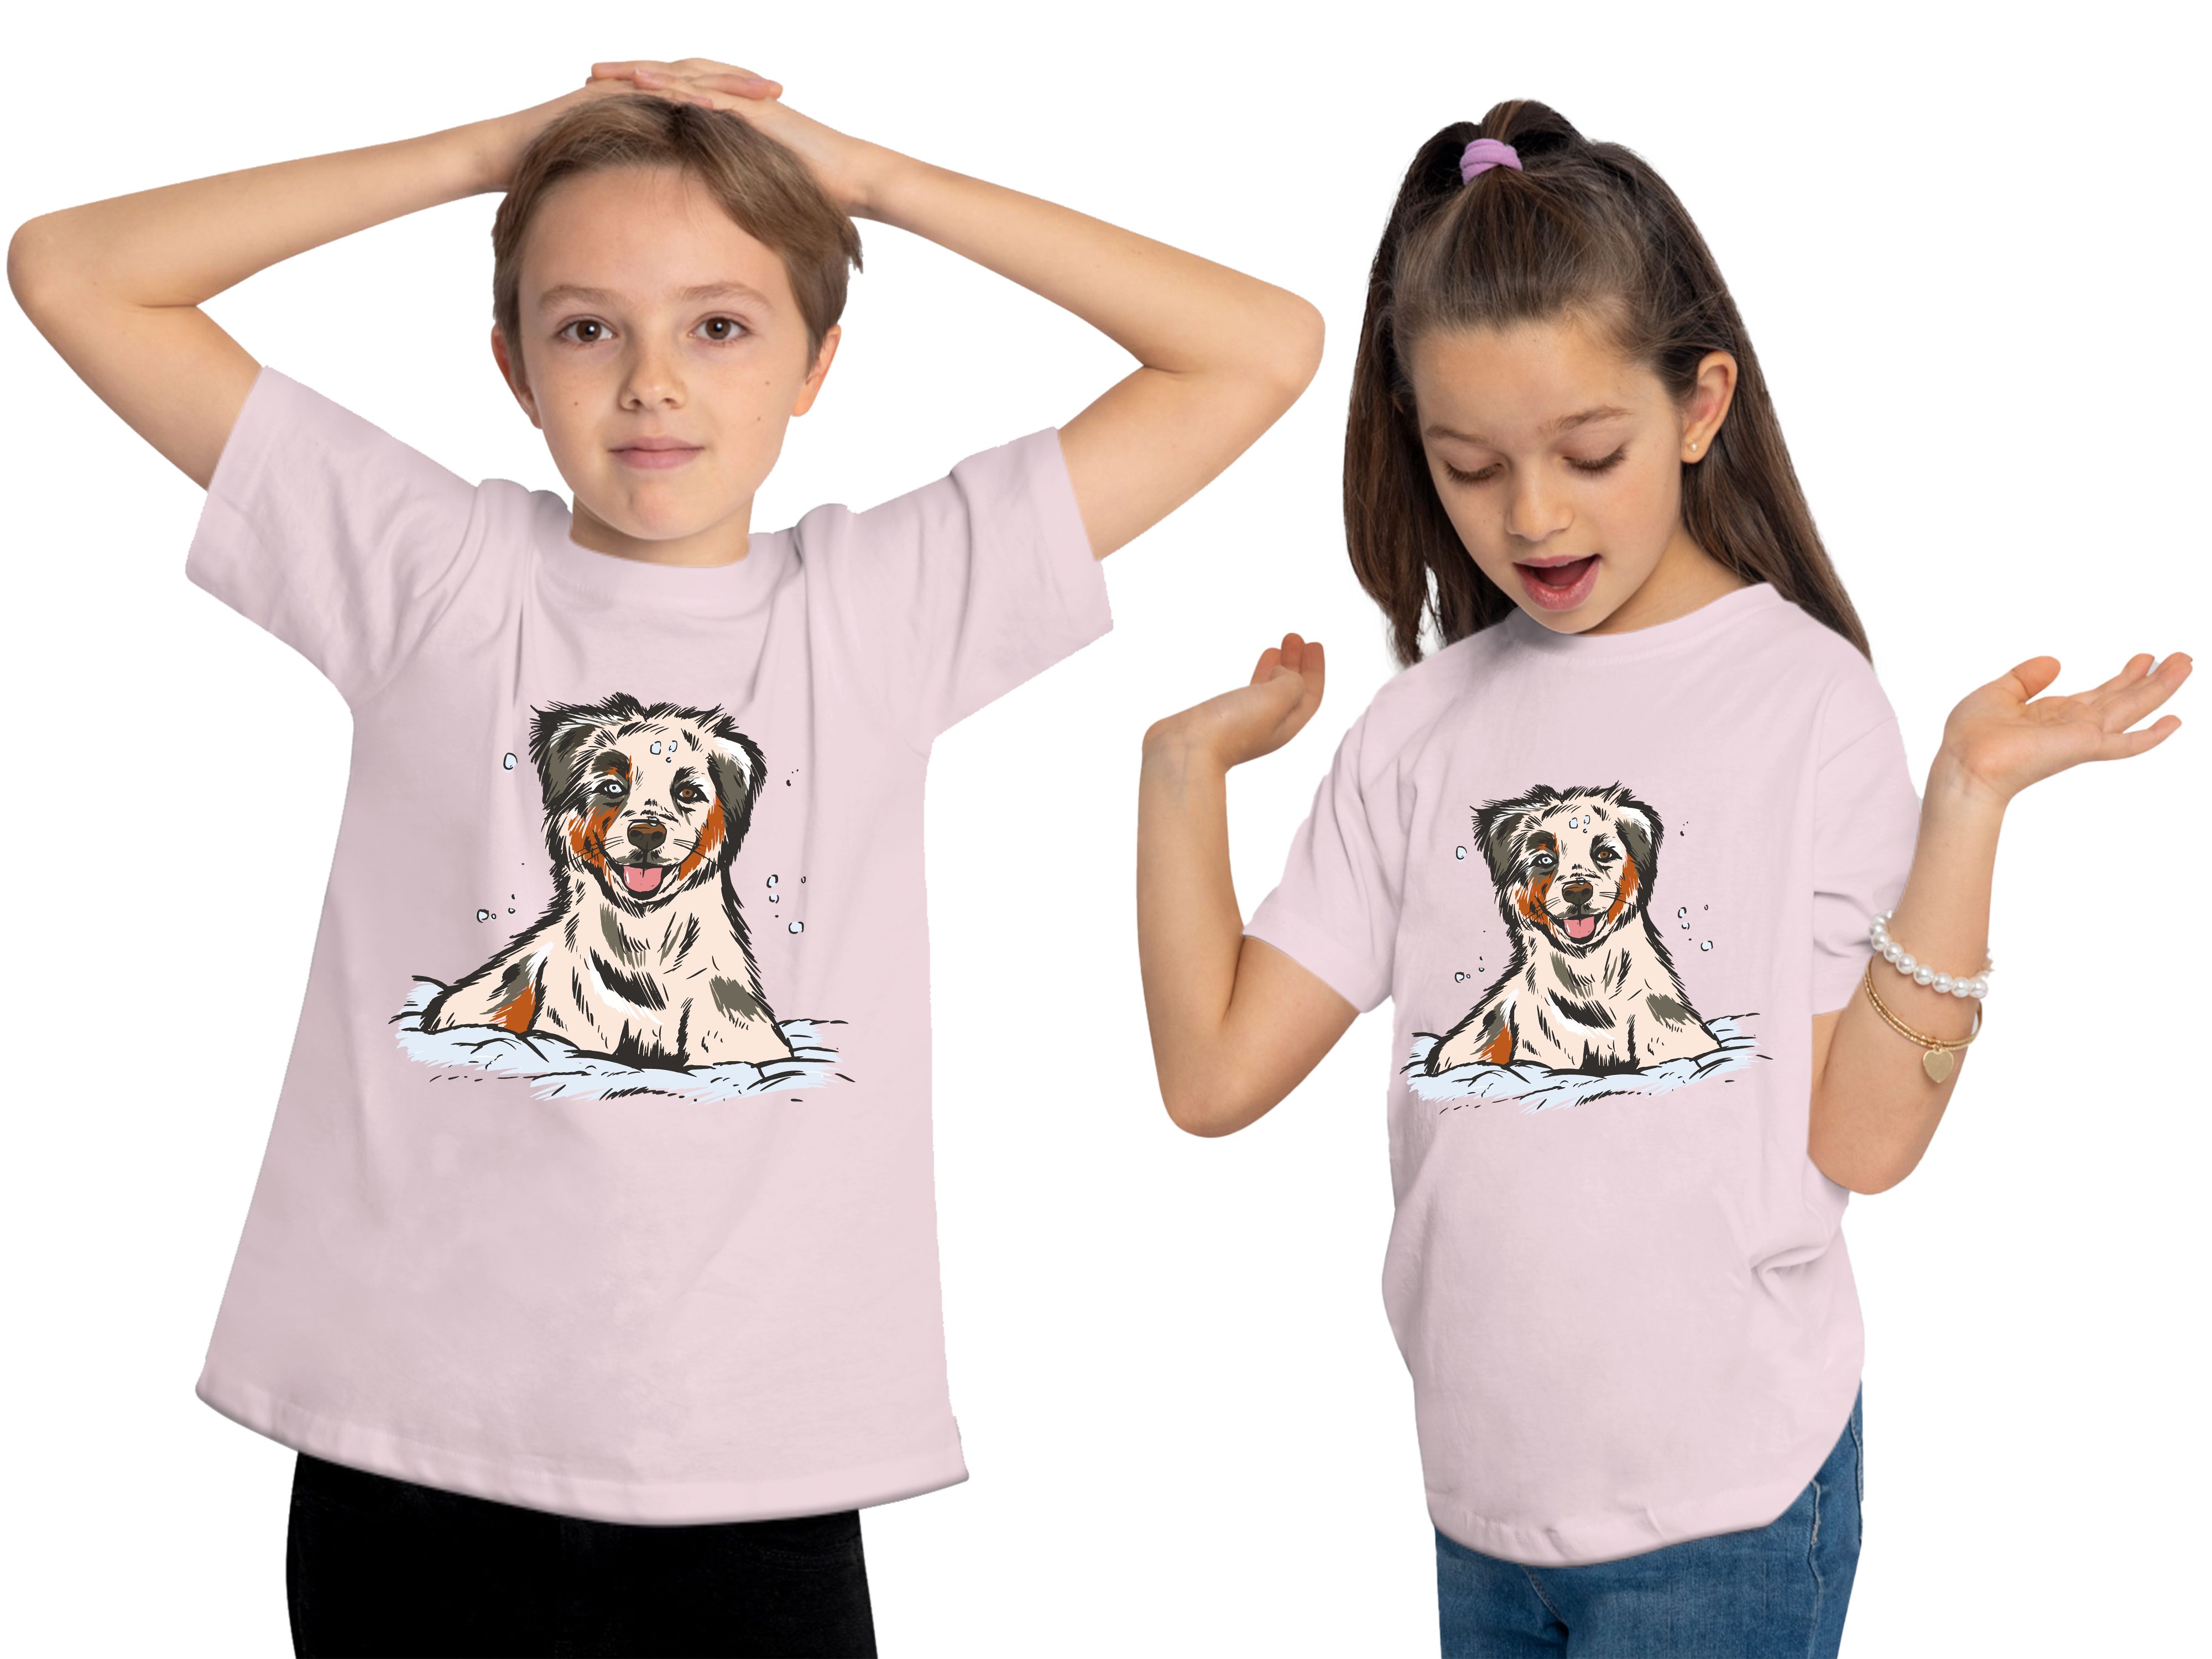 Welpe Kinder Hunde rosa i216 T-Shirt und Jugend Baumwollshirt Shepherd Aufdruck, bedrucktes Australian Print-Shirt MyDesign24 mit